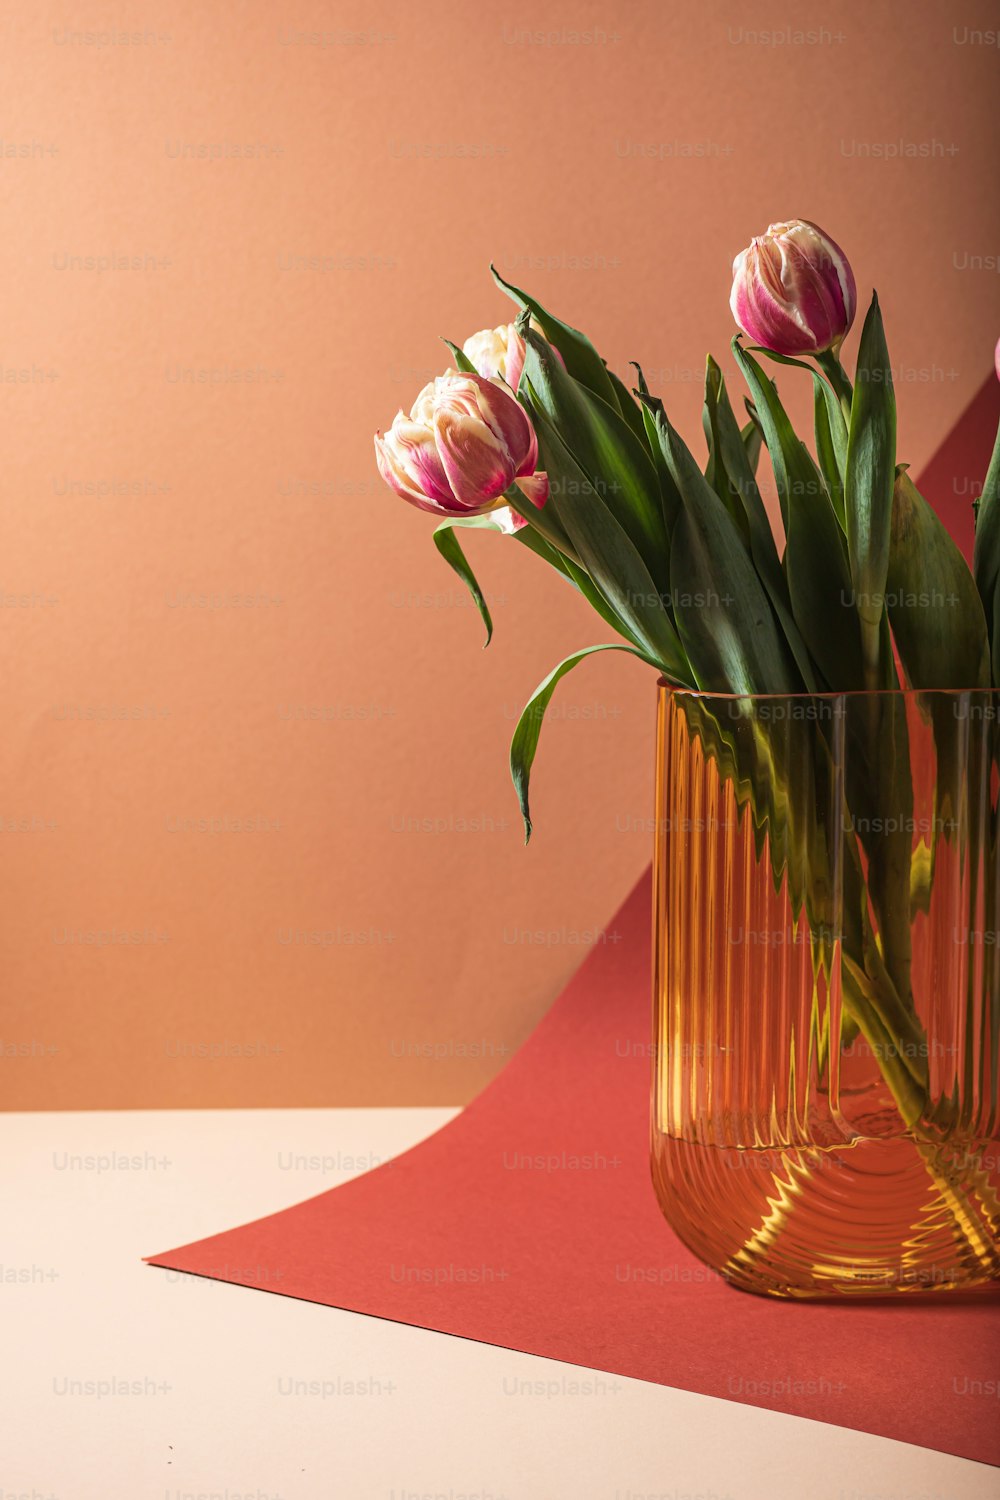 White tulips on brown paper bag photo – Free Flower Image on Unsplash